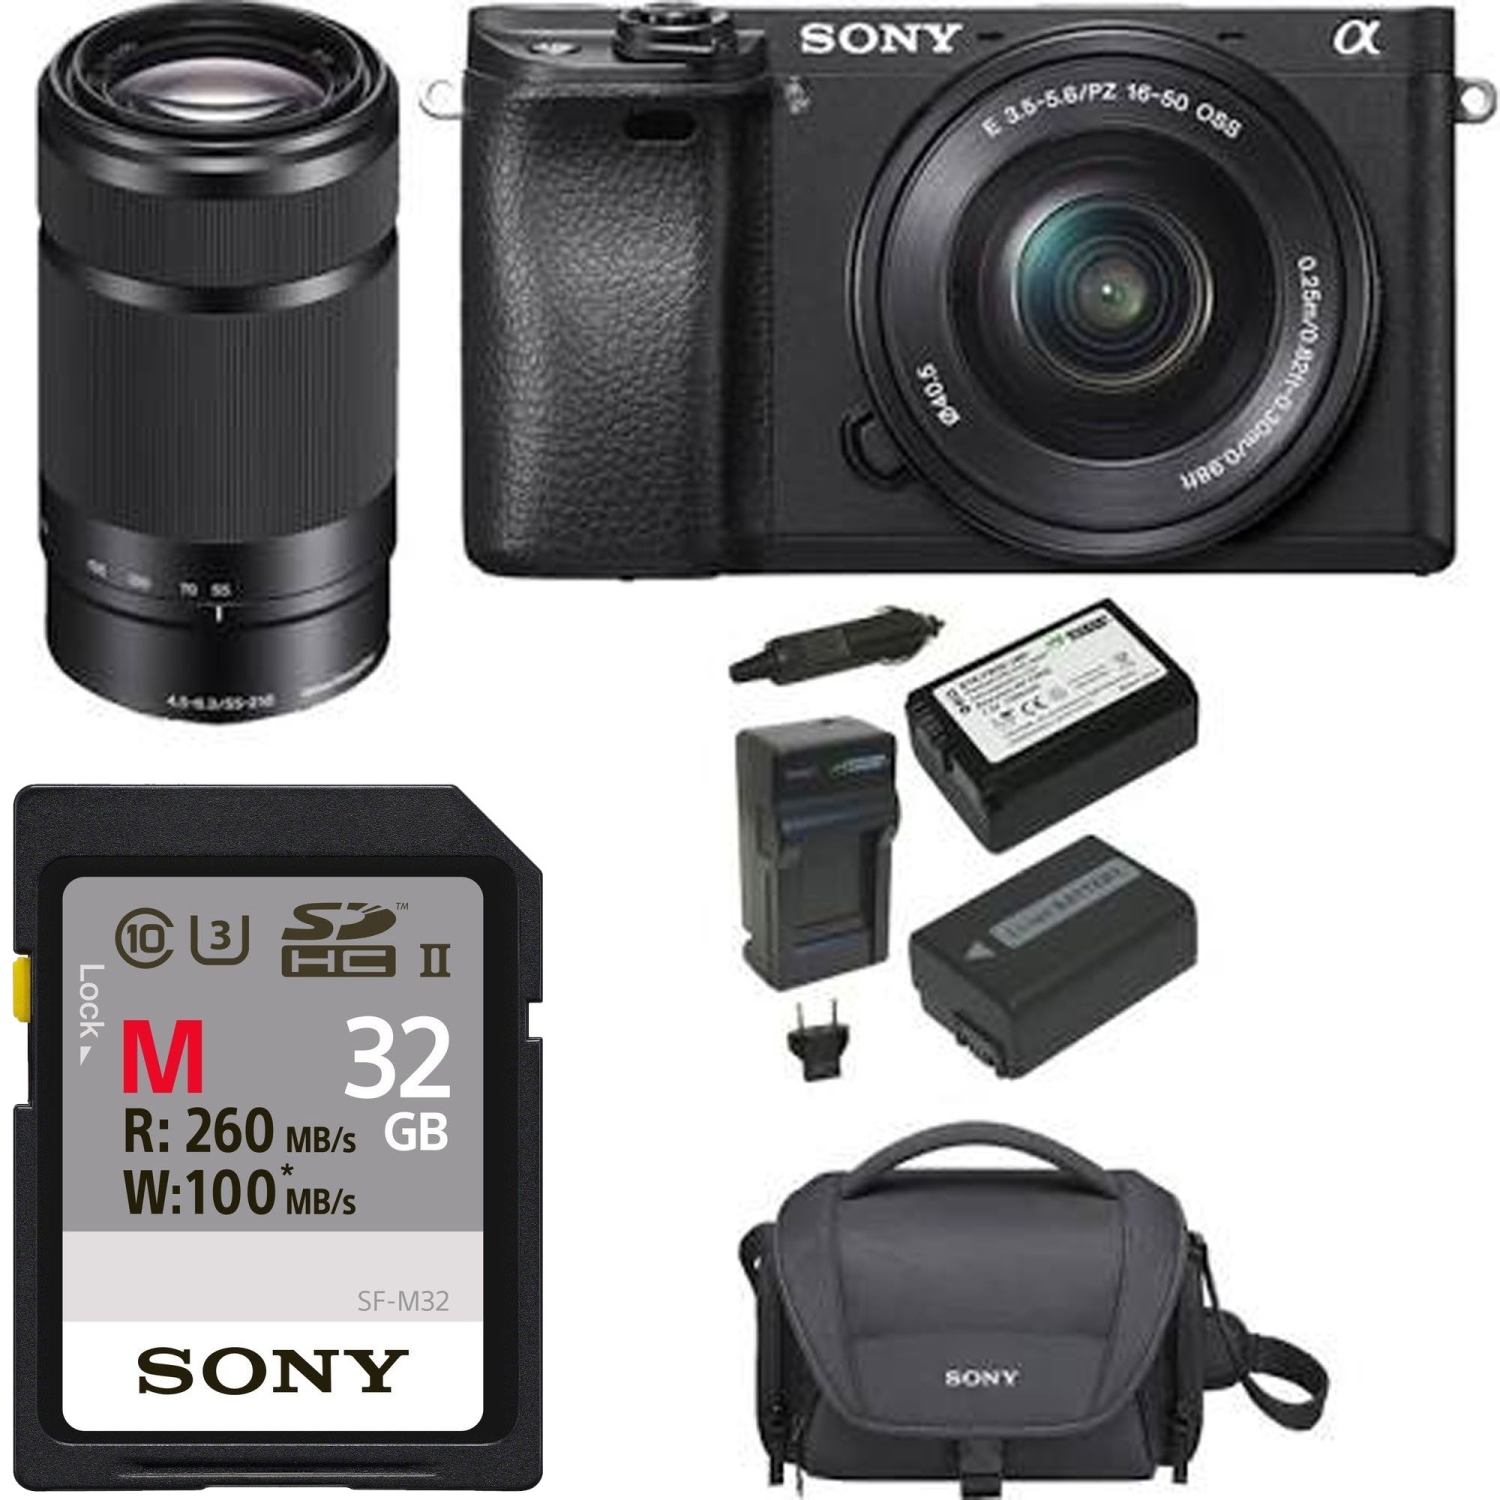 Sony Alpha a6300 Mirrorless w/ 16-50mm Lens & Sony E 55-210mm Sony 32GB Memory Card Starter Kit - US Version w/ Seller Warranty